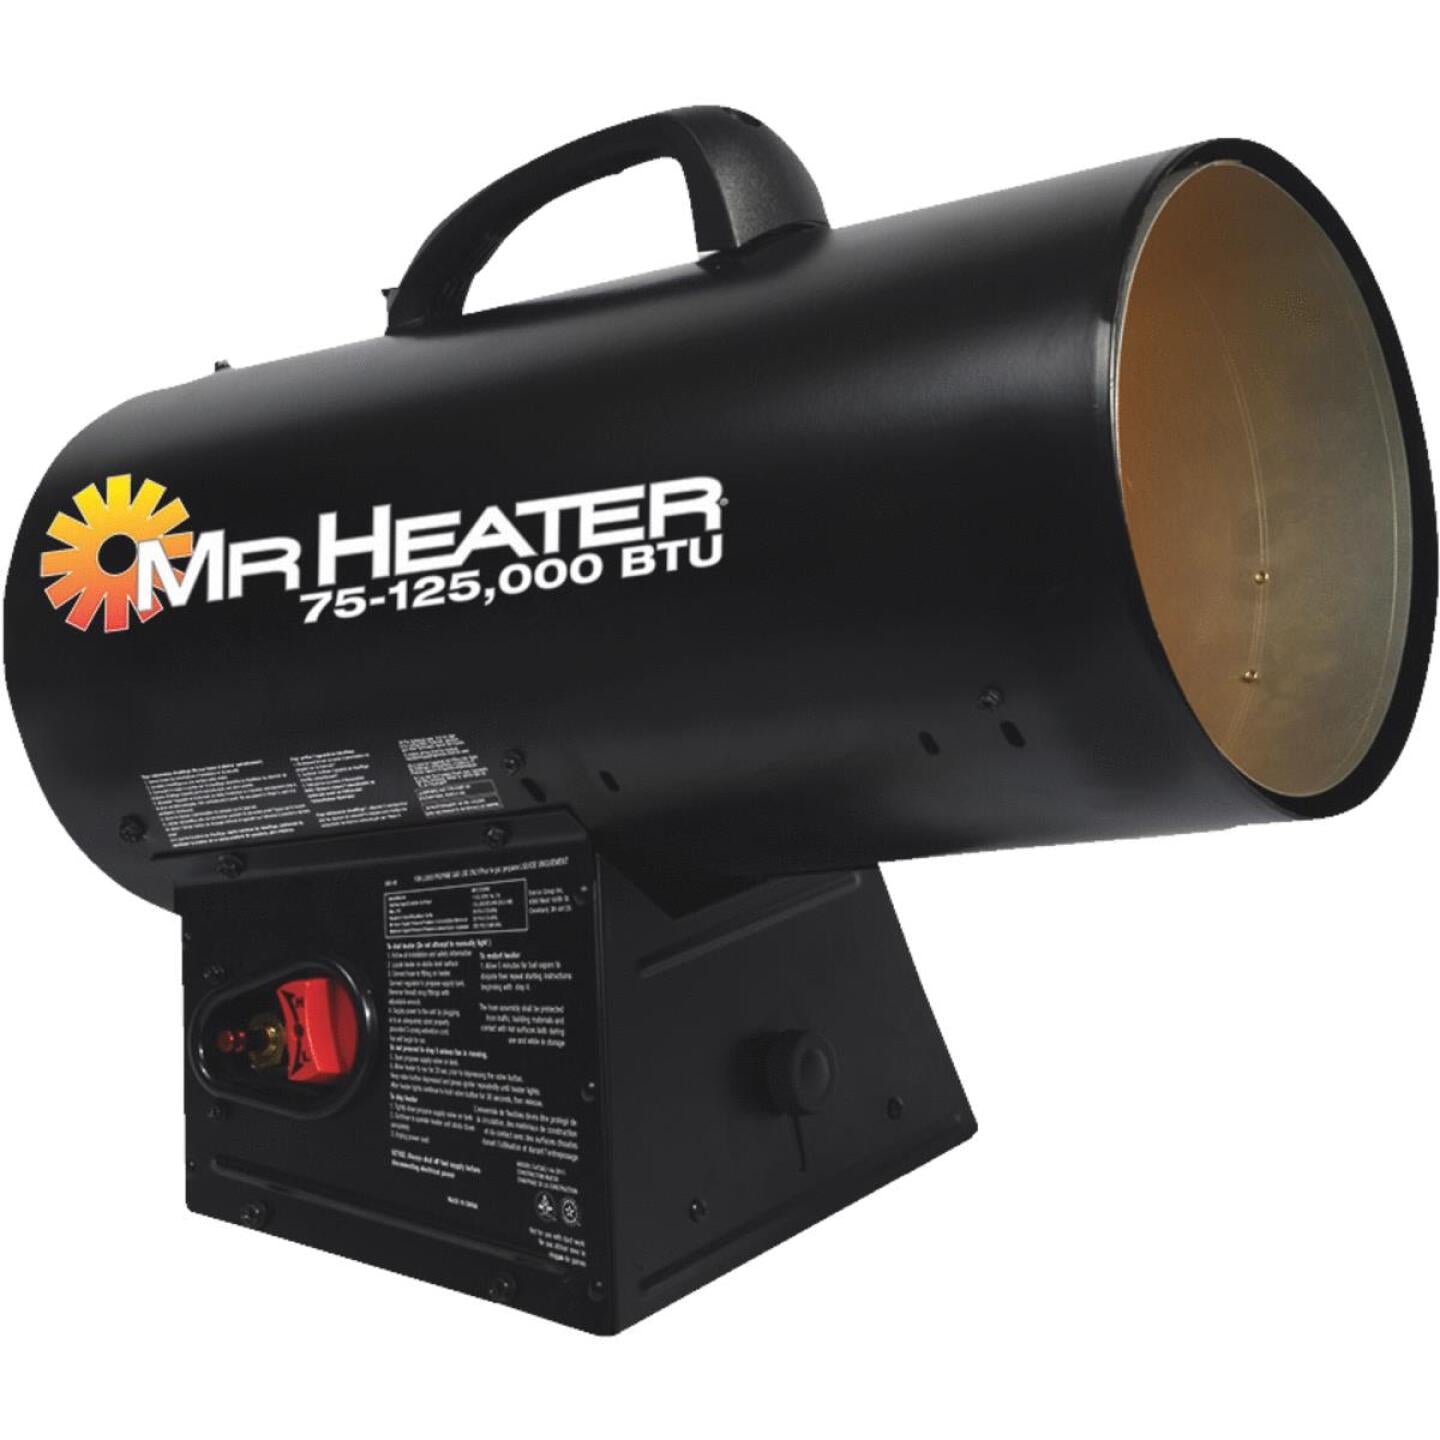 Mr. Heater, MR. HEATER 75-125,000 BTU Propane QBT Forced Air Heater